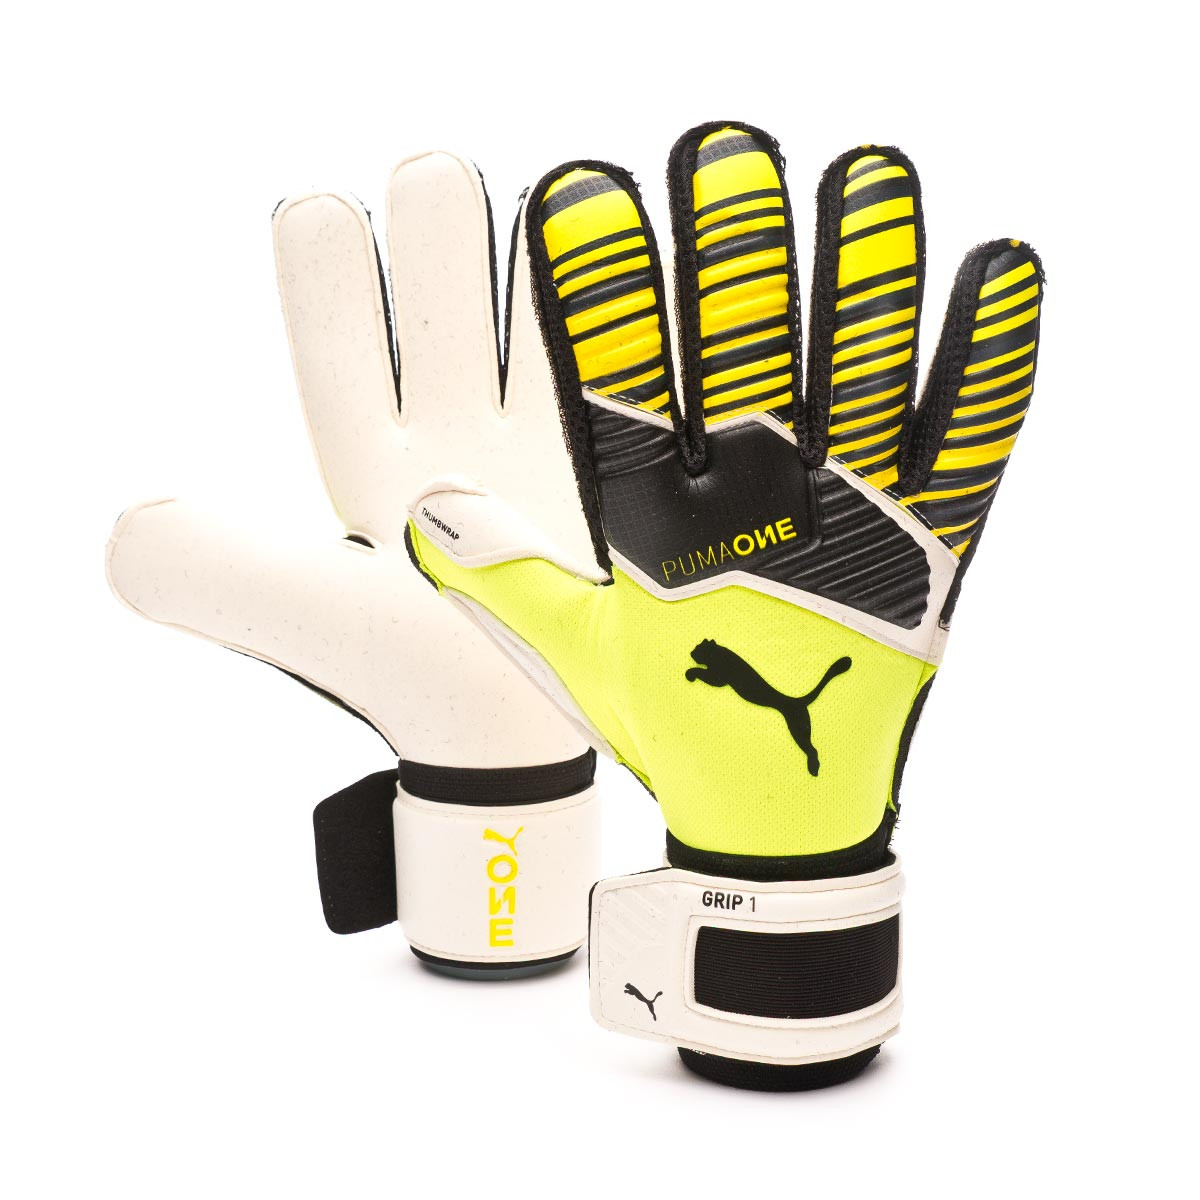 Glove Puma One Grip 1 RC Yellow alert-Puma black-Puma white - Football  store Fútbol Emotion